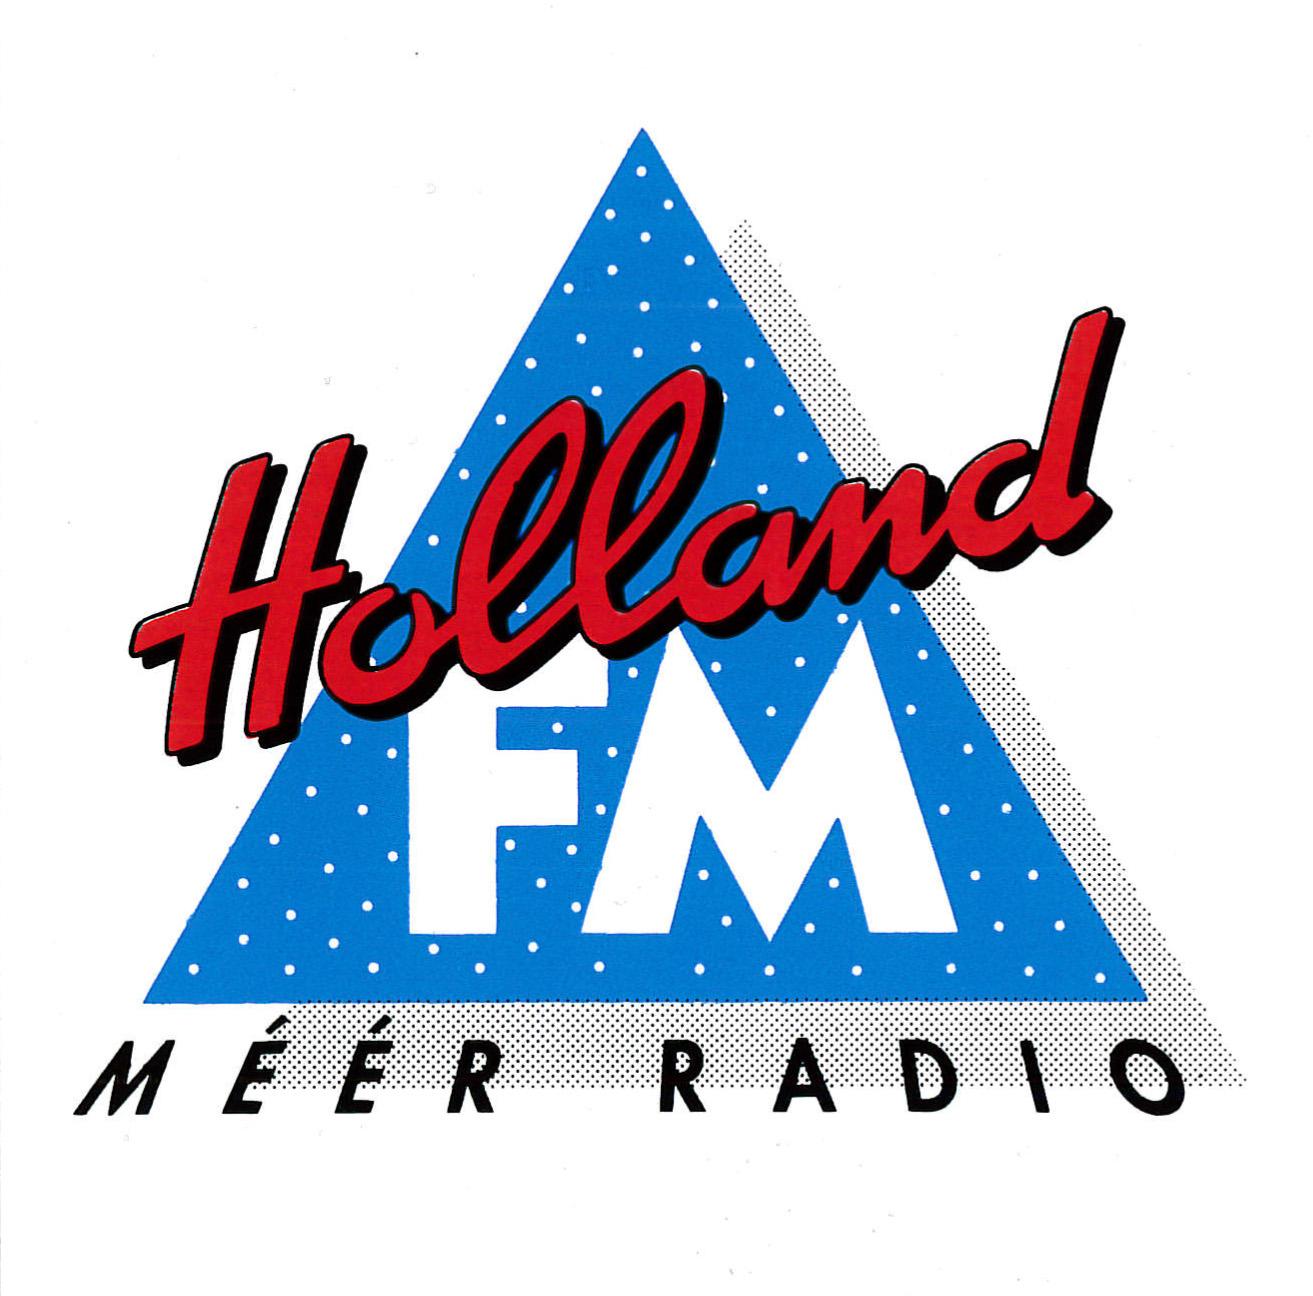 Holland FM